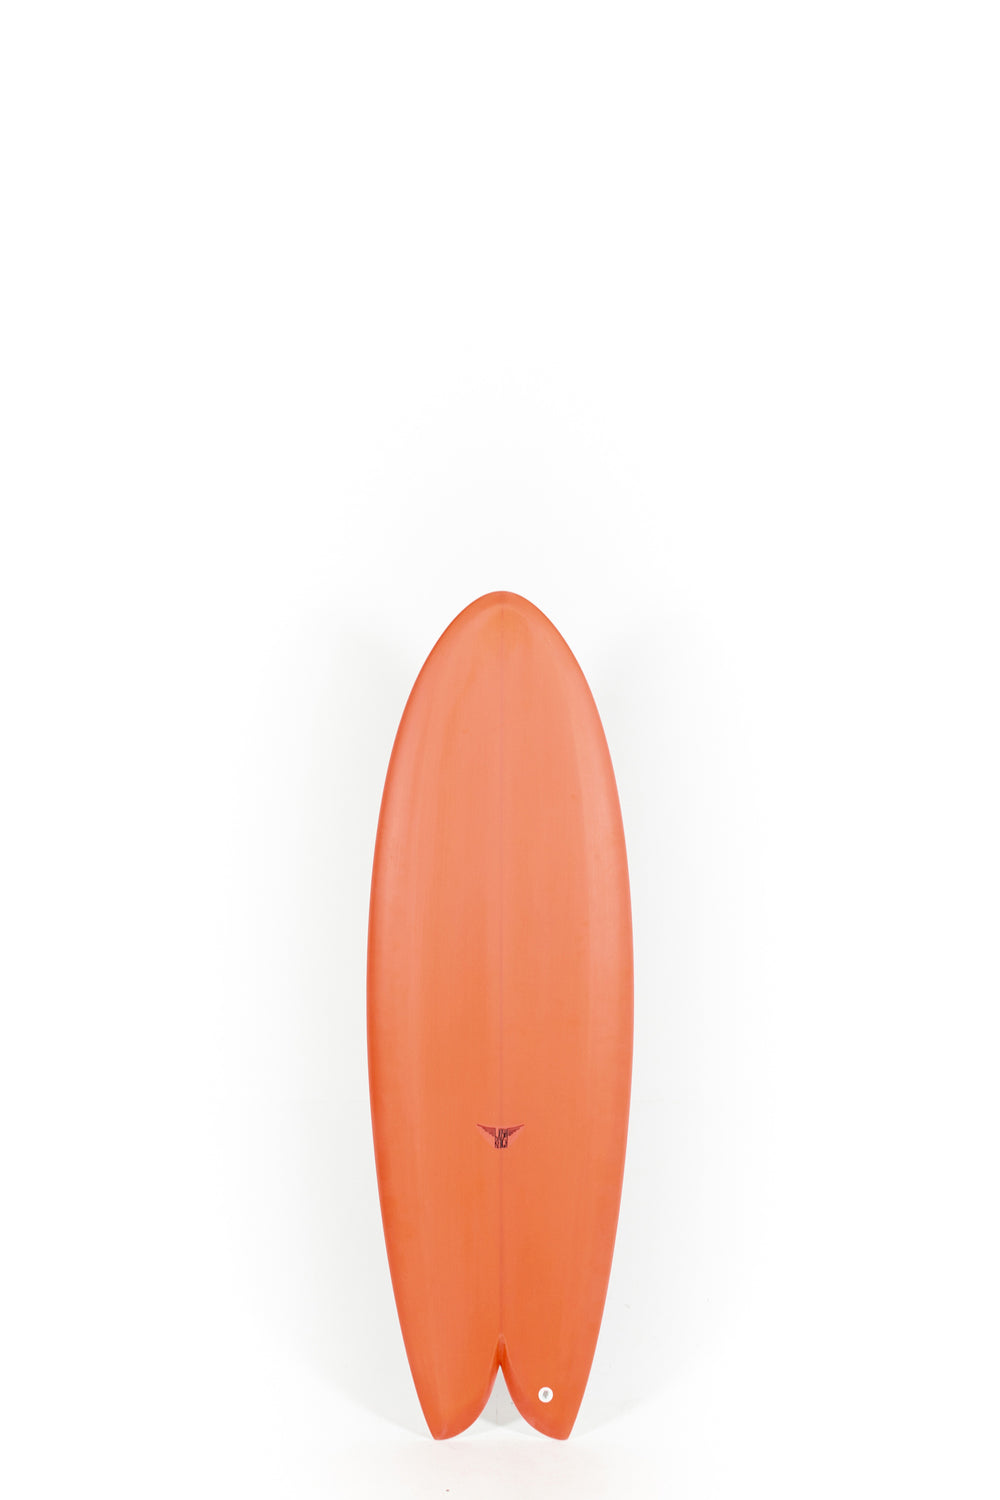 Joshua Keogh Surfboard - MONAD 5'4